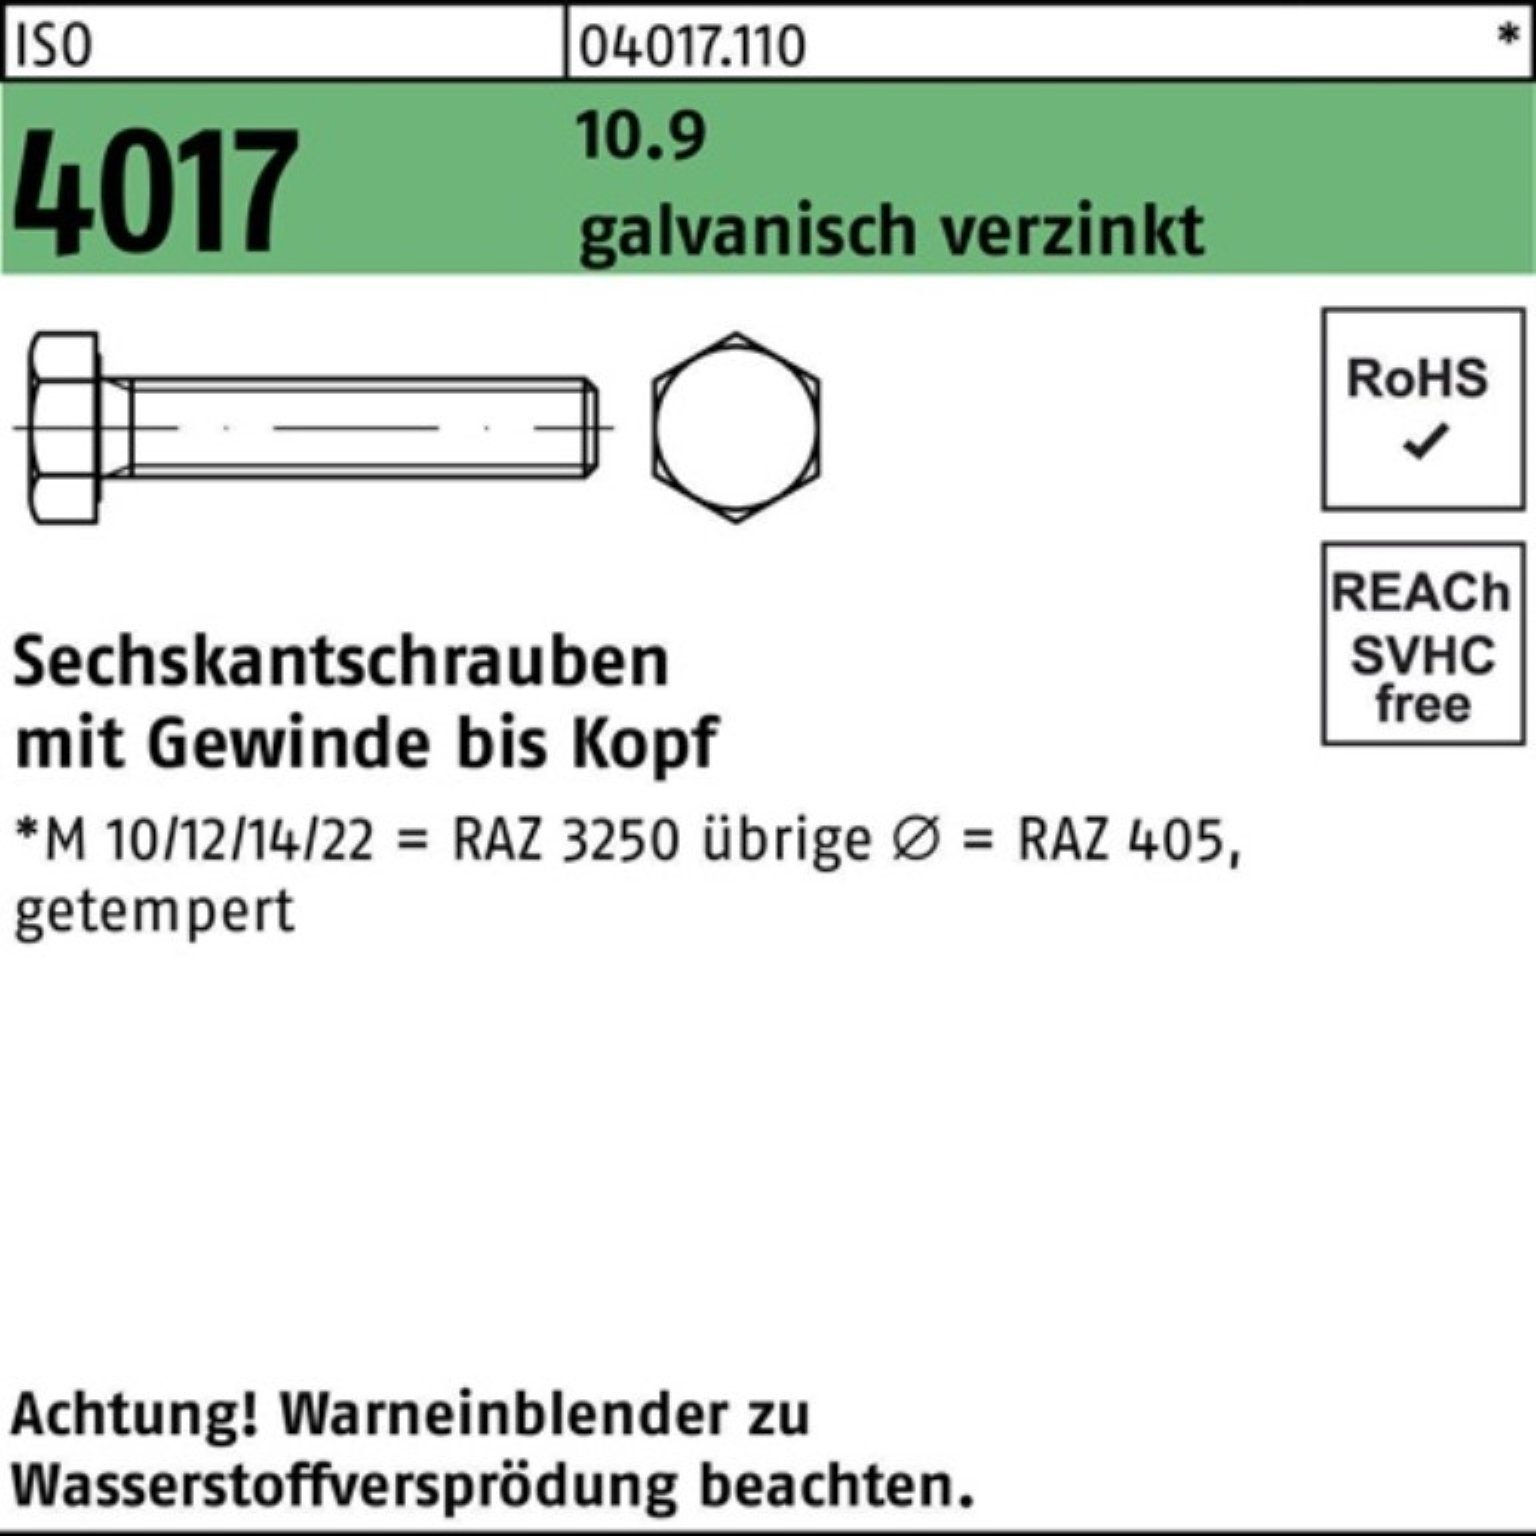 1 Bufab Sechskantschraube VG ISO 160 Pack 10.9 Sechskantschraube galv.verz. 100er M30x 4017 St